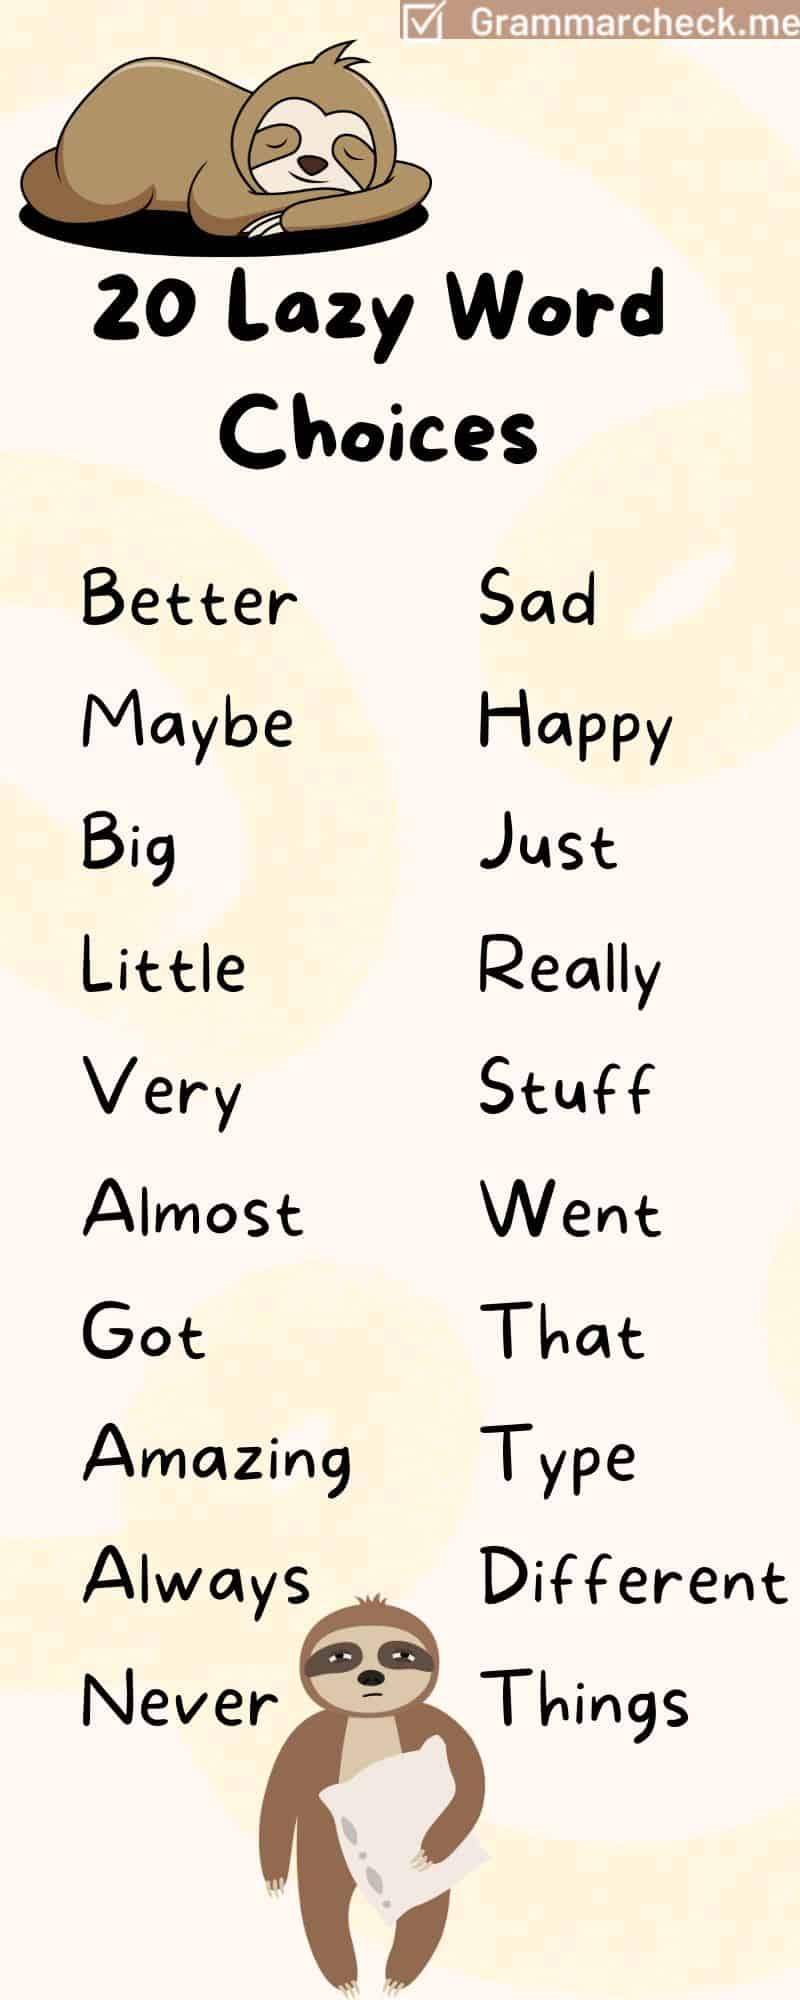 Lazy word choices